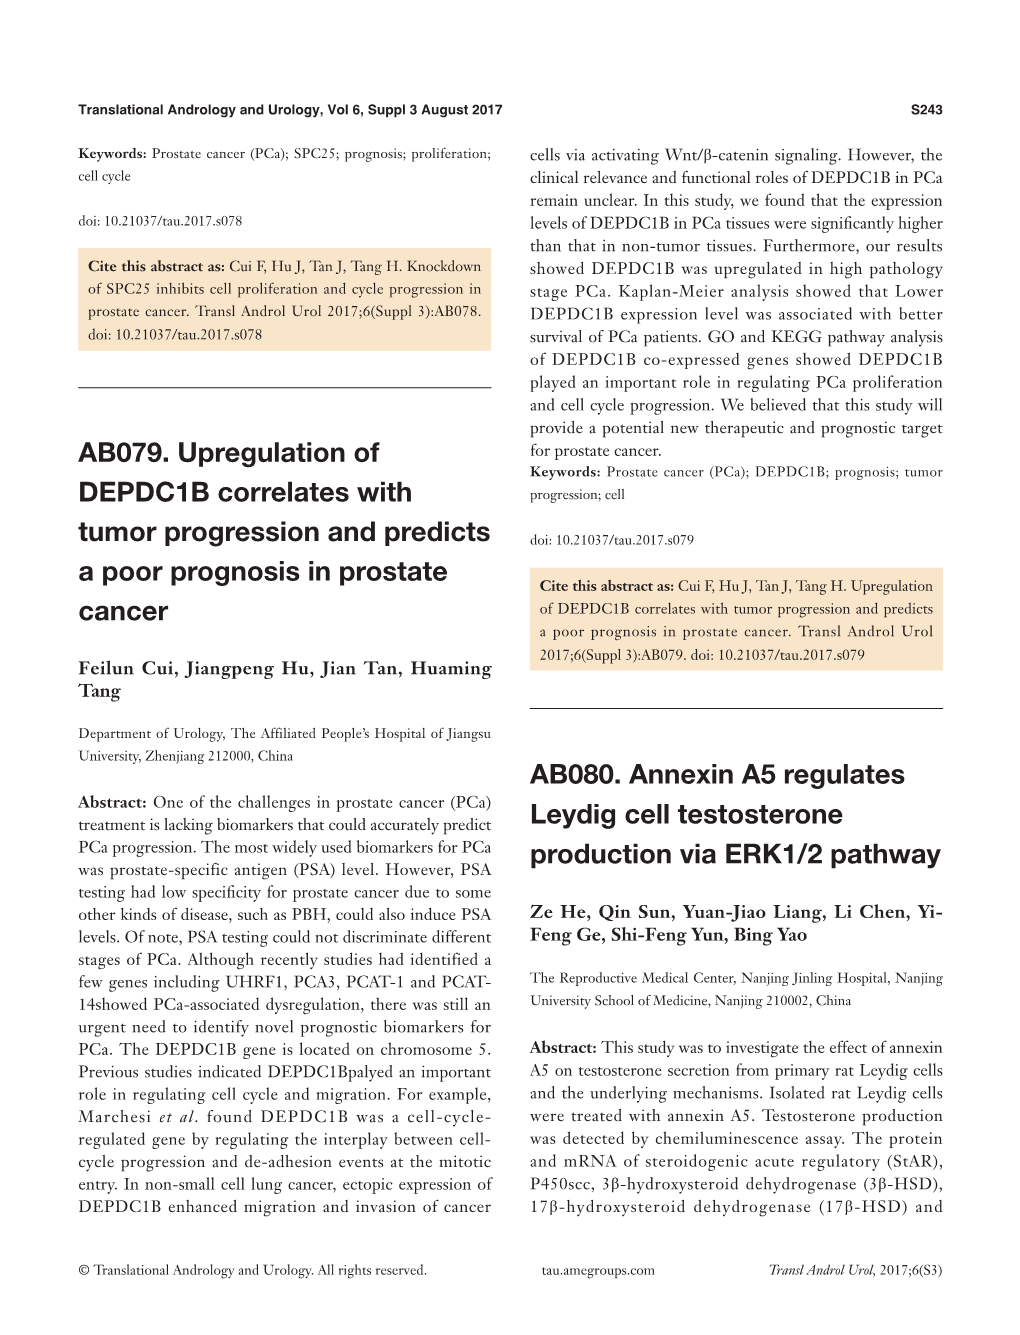 AB079. Upregulation of DEPDC1B Correlates with Tumor